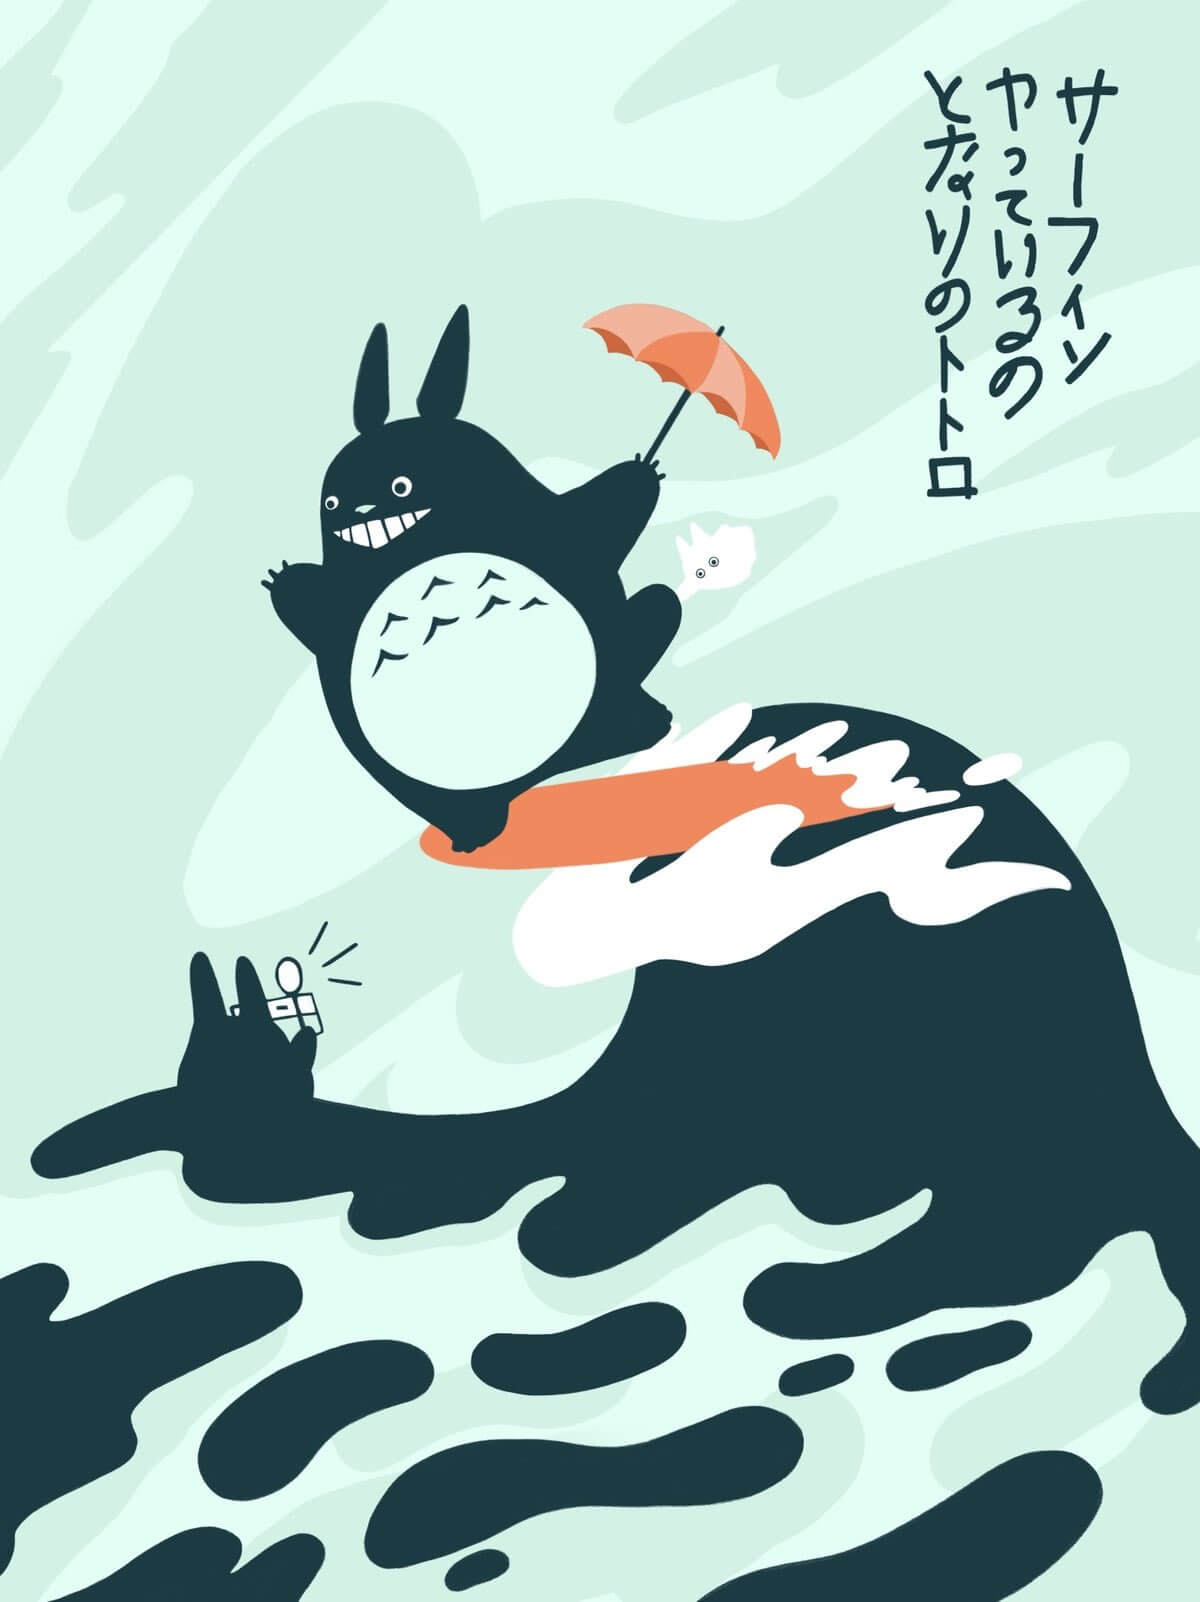 Totoro surfing!' Illustration by Jack Soren